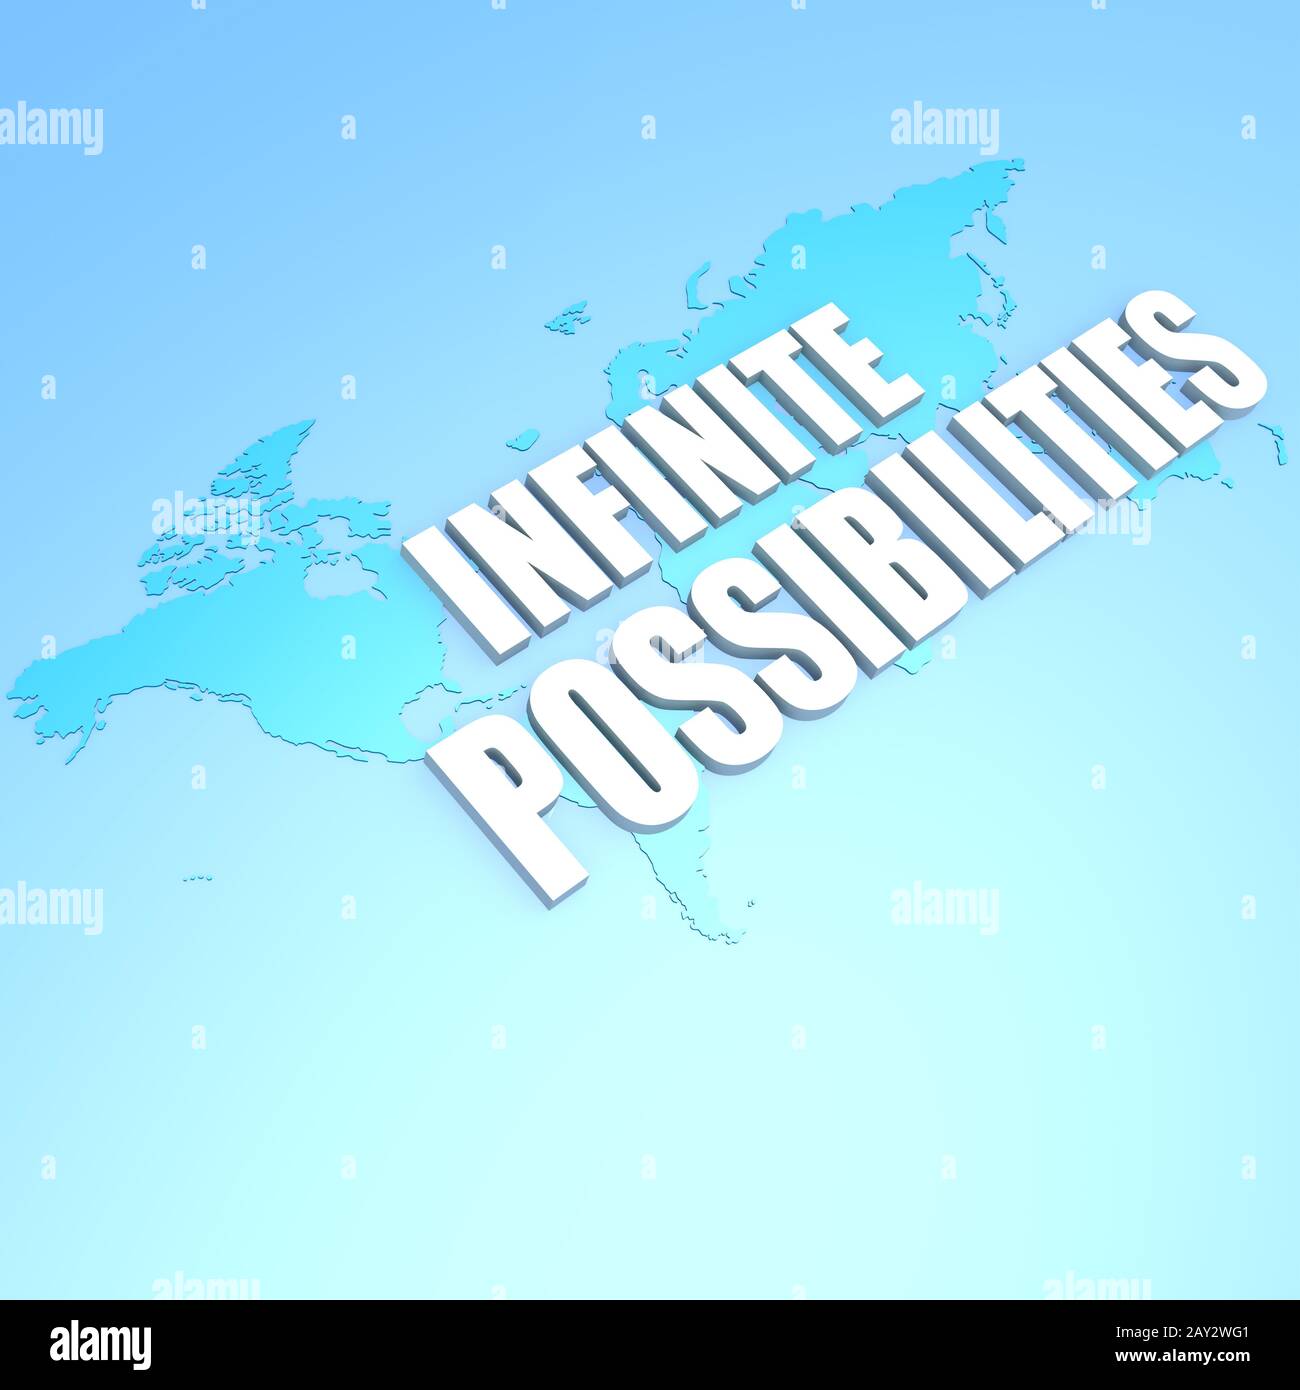 Infinite possibilities world map Stock Photo